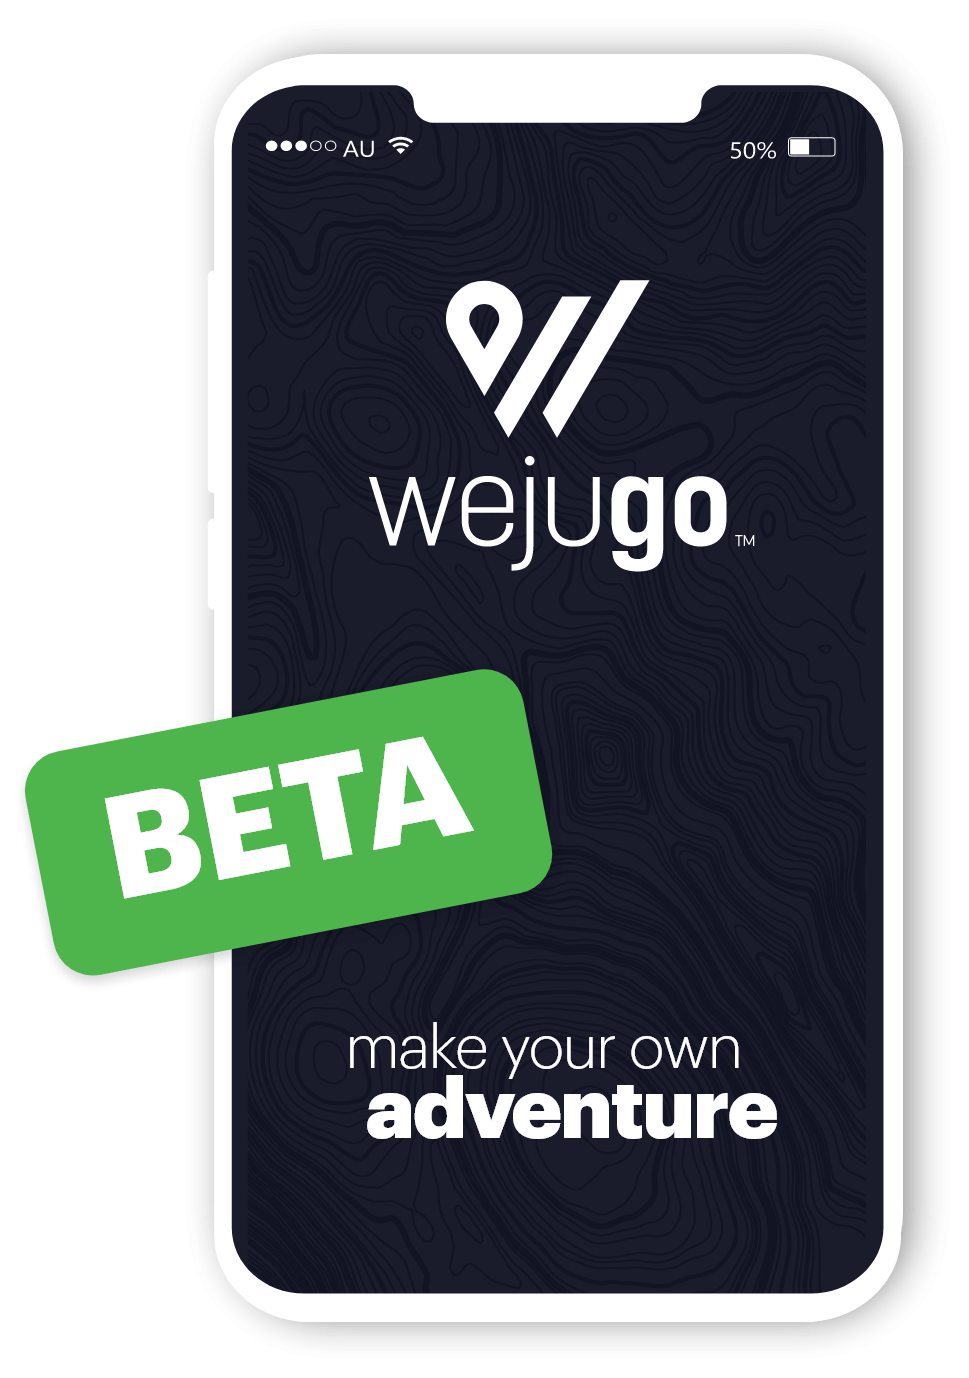 The wejugo mobile app